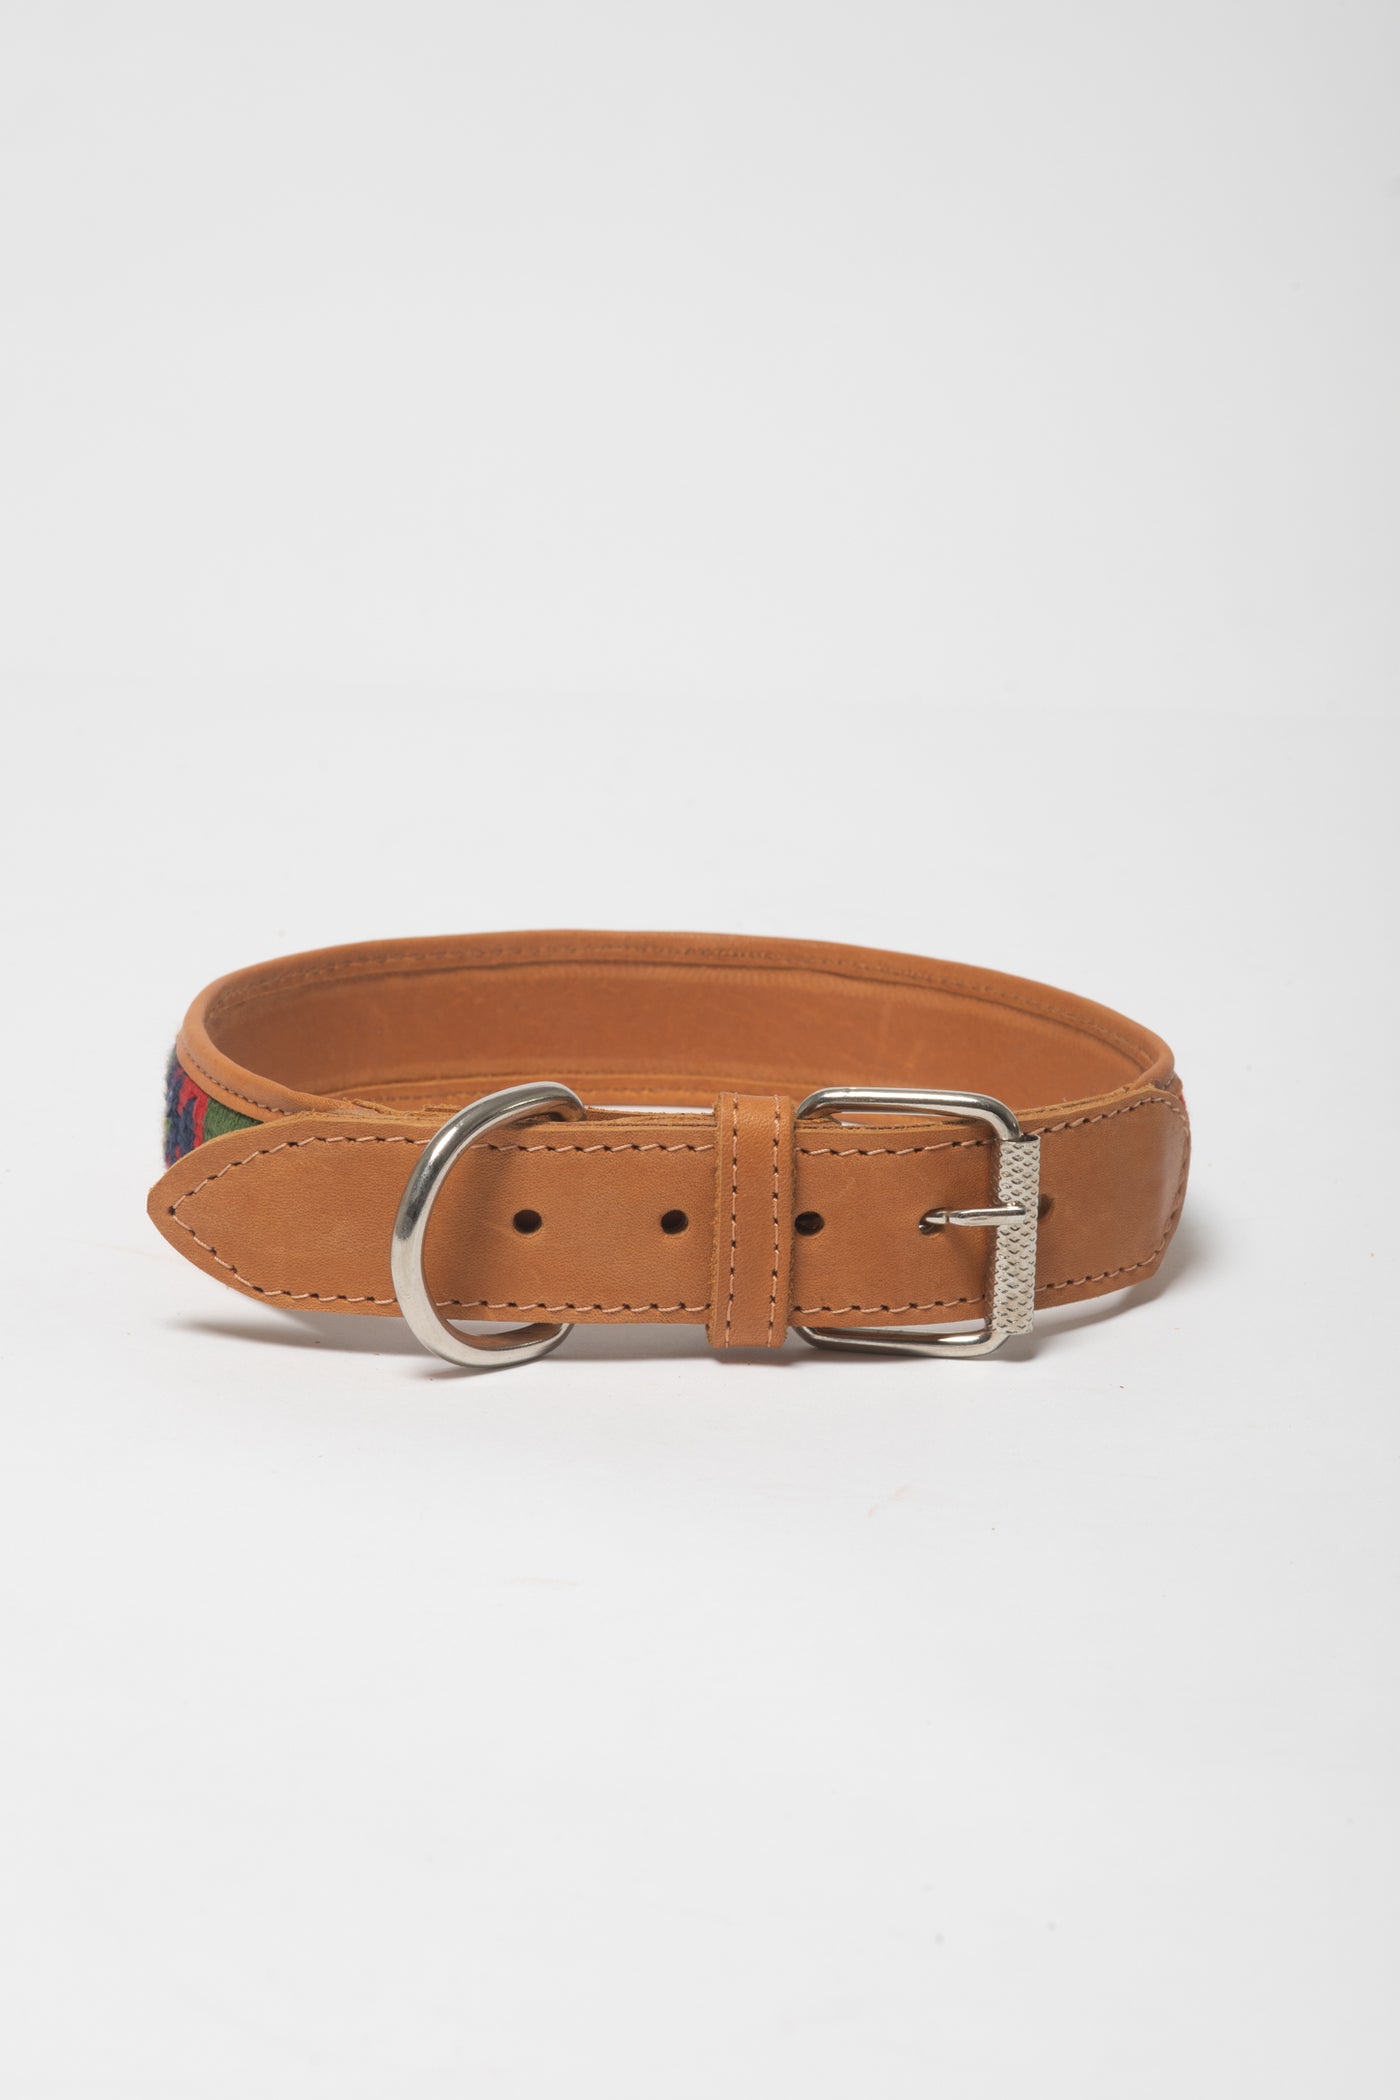 Tierra Handmade Leather Dog Collar